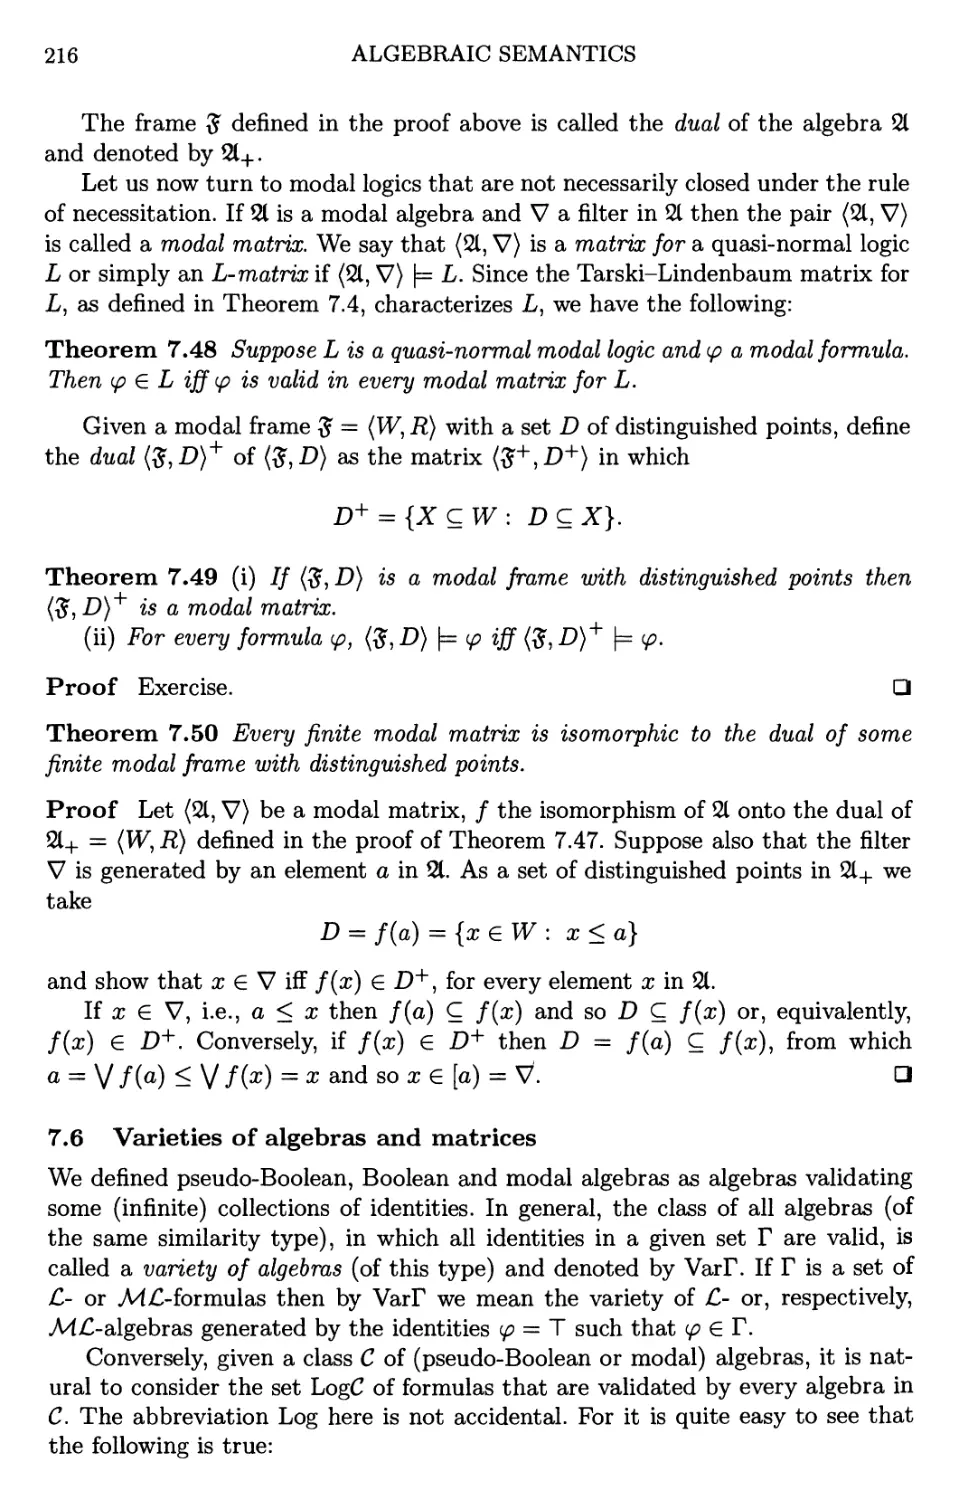 7.6 Varieties of algebras and matrices